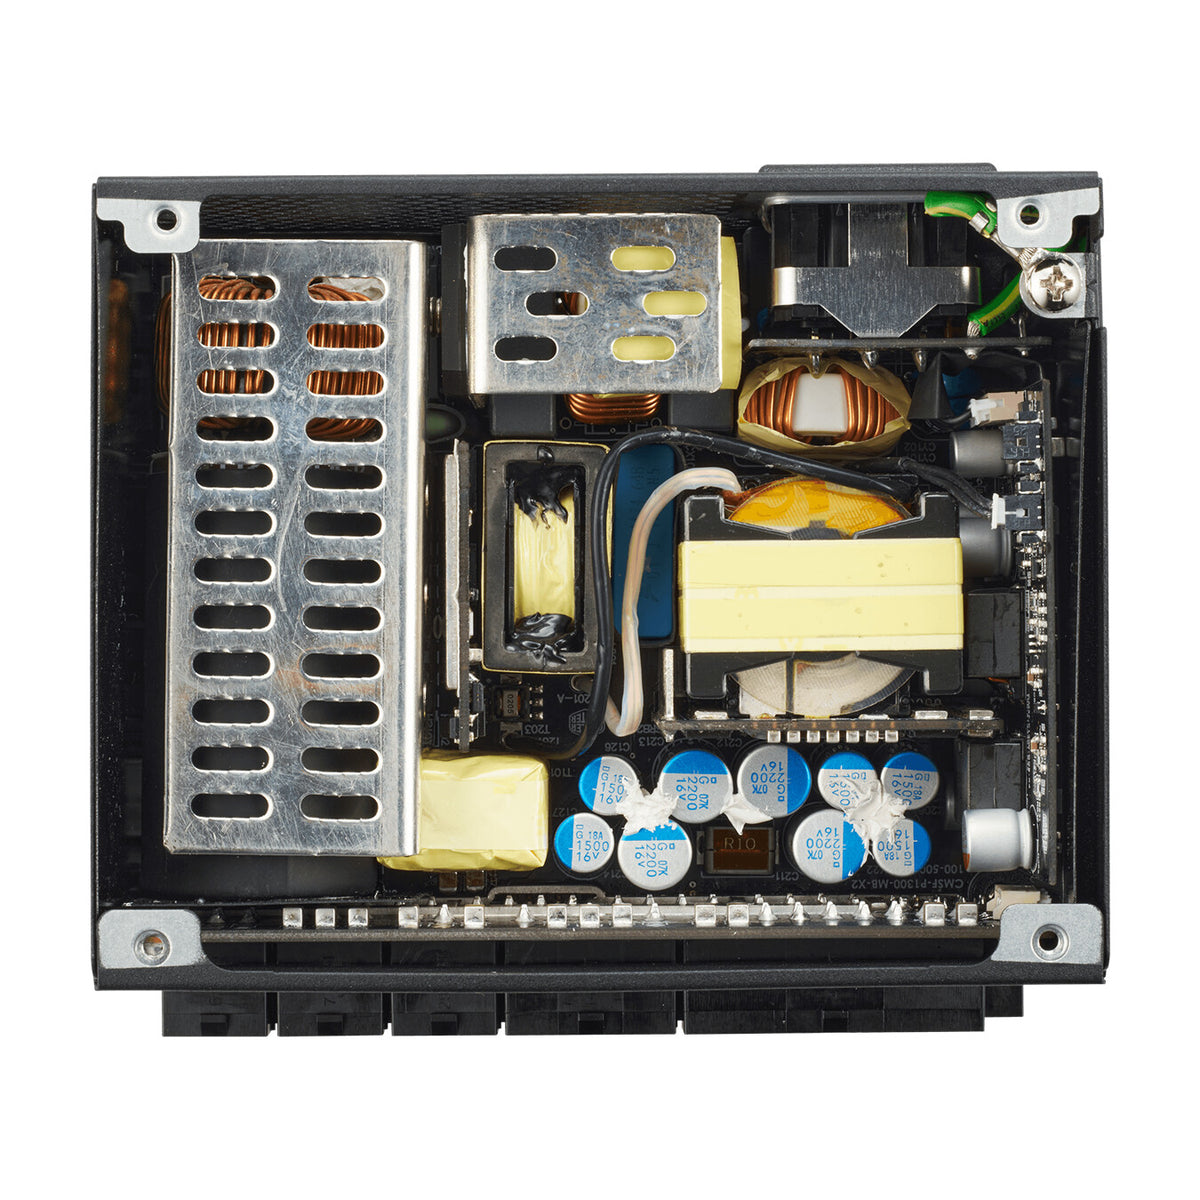 Cooler Master V SFX - 1100W 80+ Platinum Fully Modular Power Supply Unit in Black